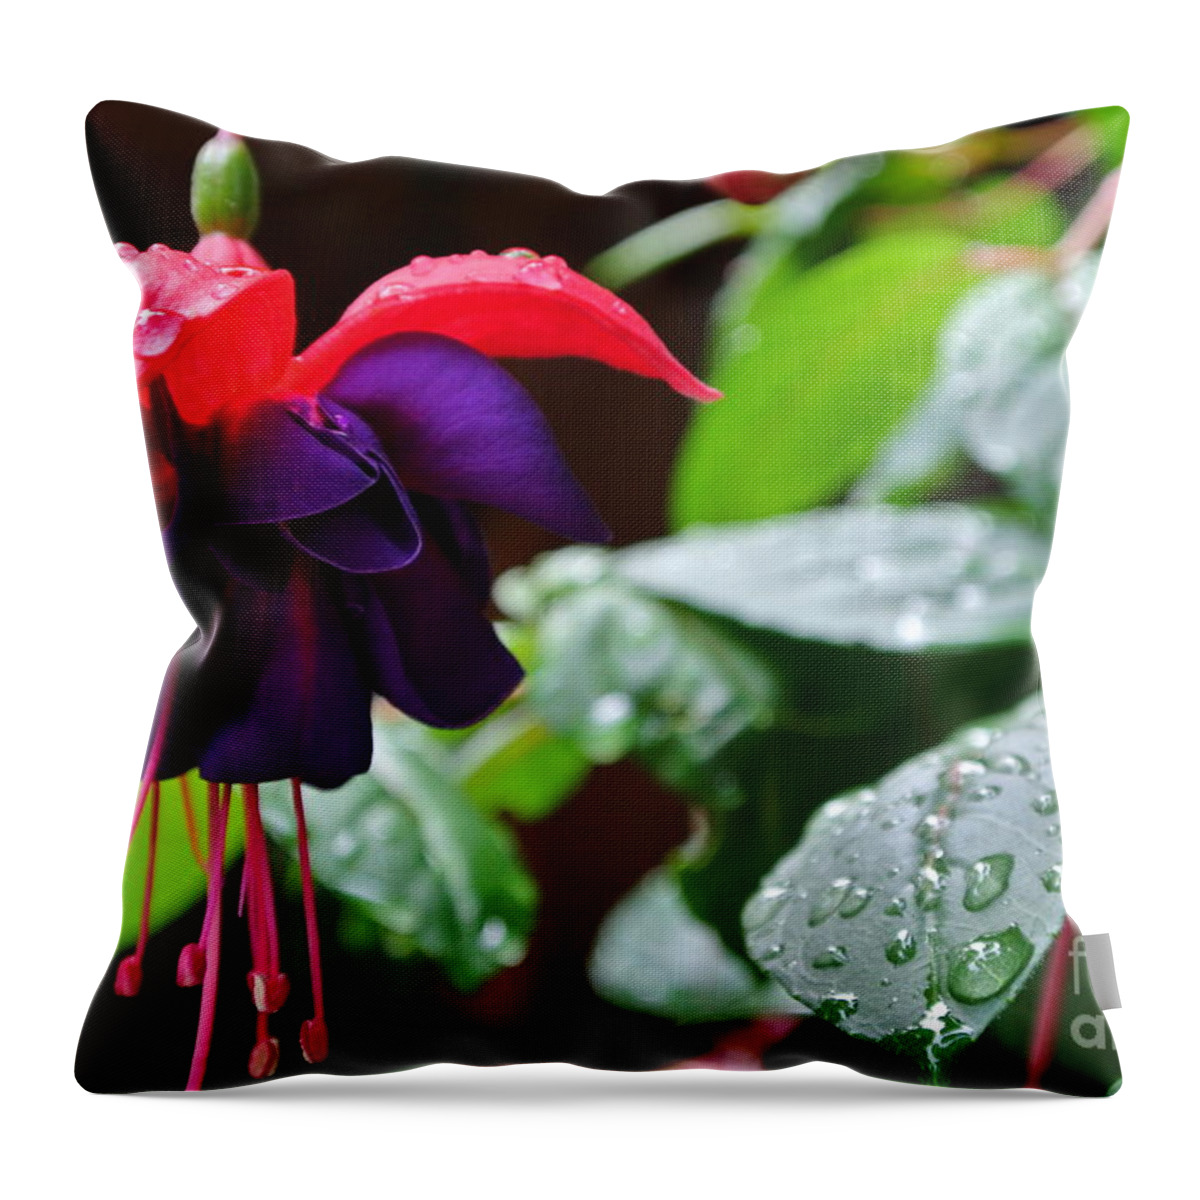  Throw Pillow featuring the photograph Fuchsia After Rain by Sharron Cuthbertson